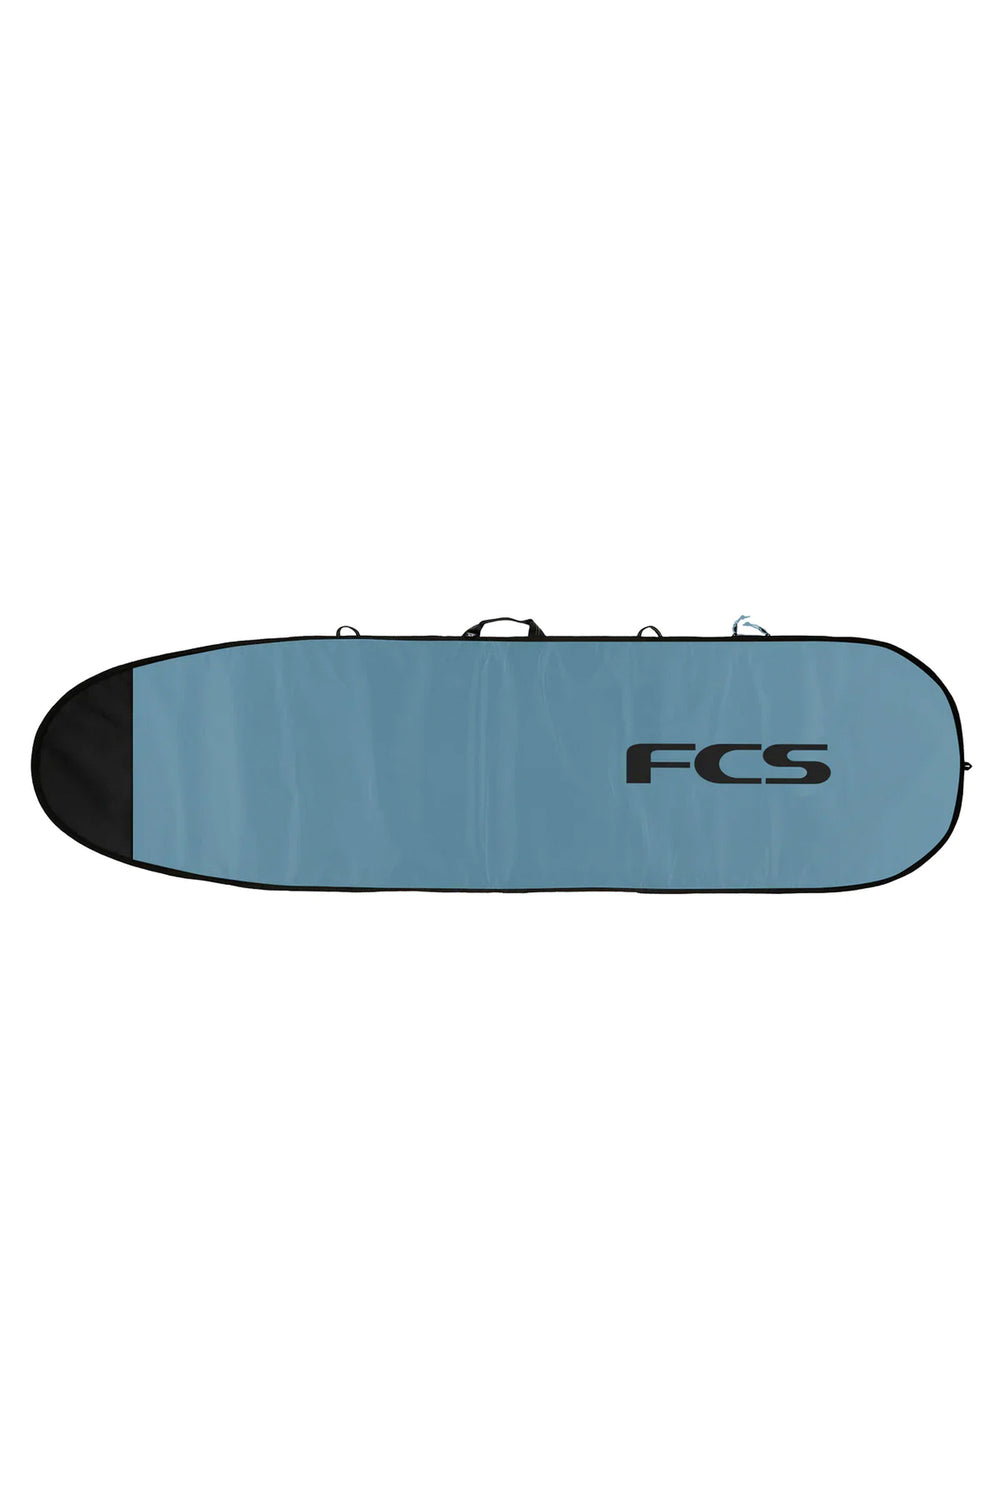 PUKAS-SURF-SHOP-BOARDBAG-FCS-CLASSIC-FUN-6'0